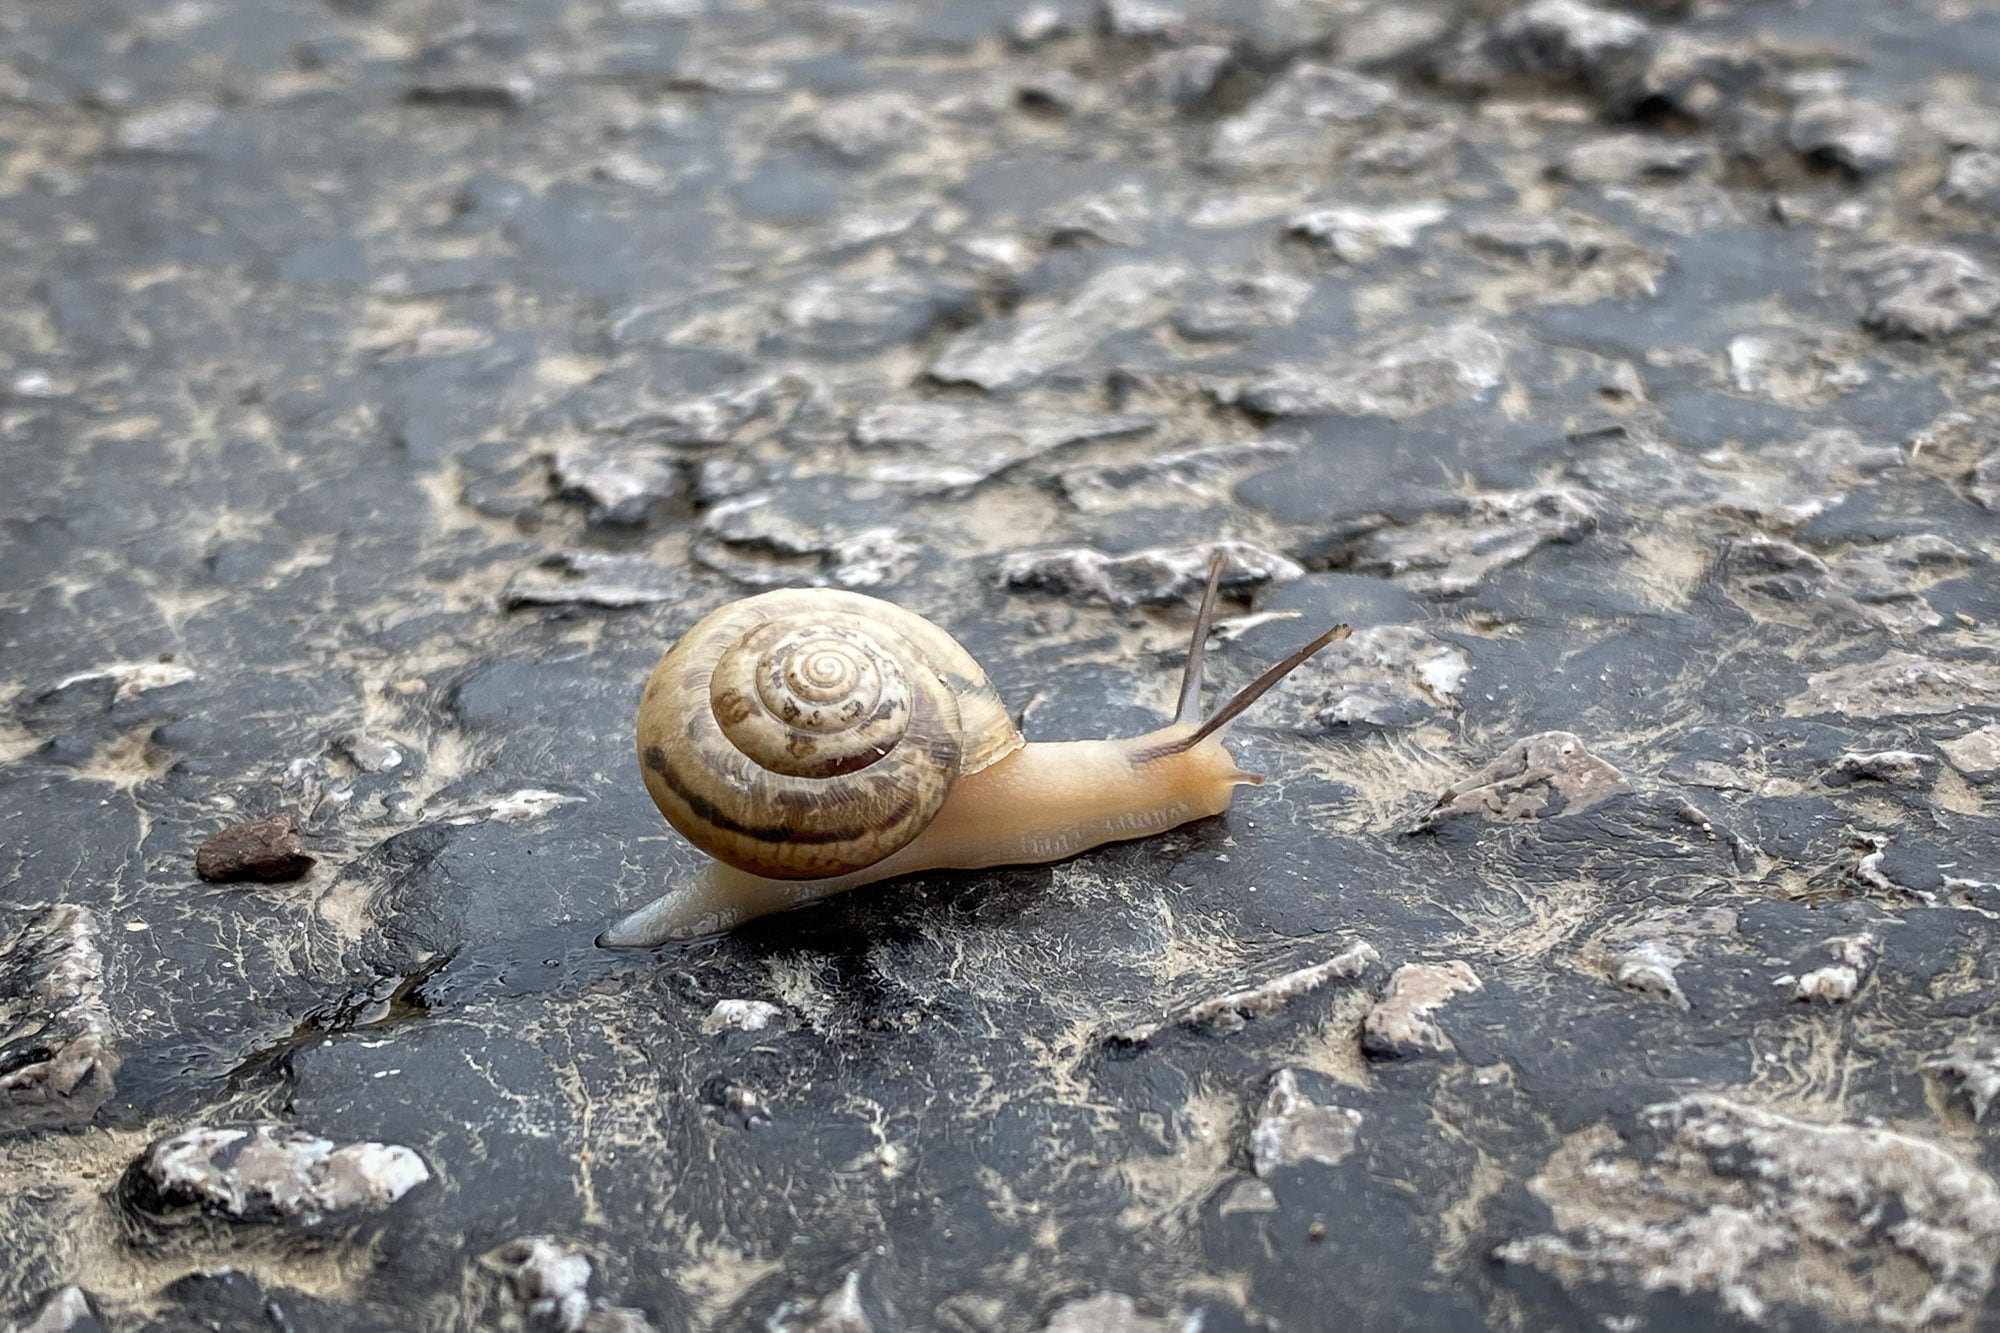 snail-bro on the way from Catalzeytin to Samanci